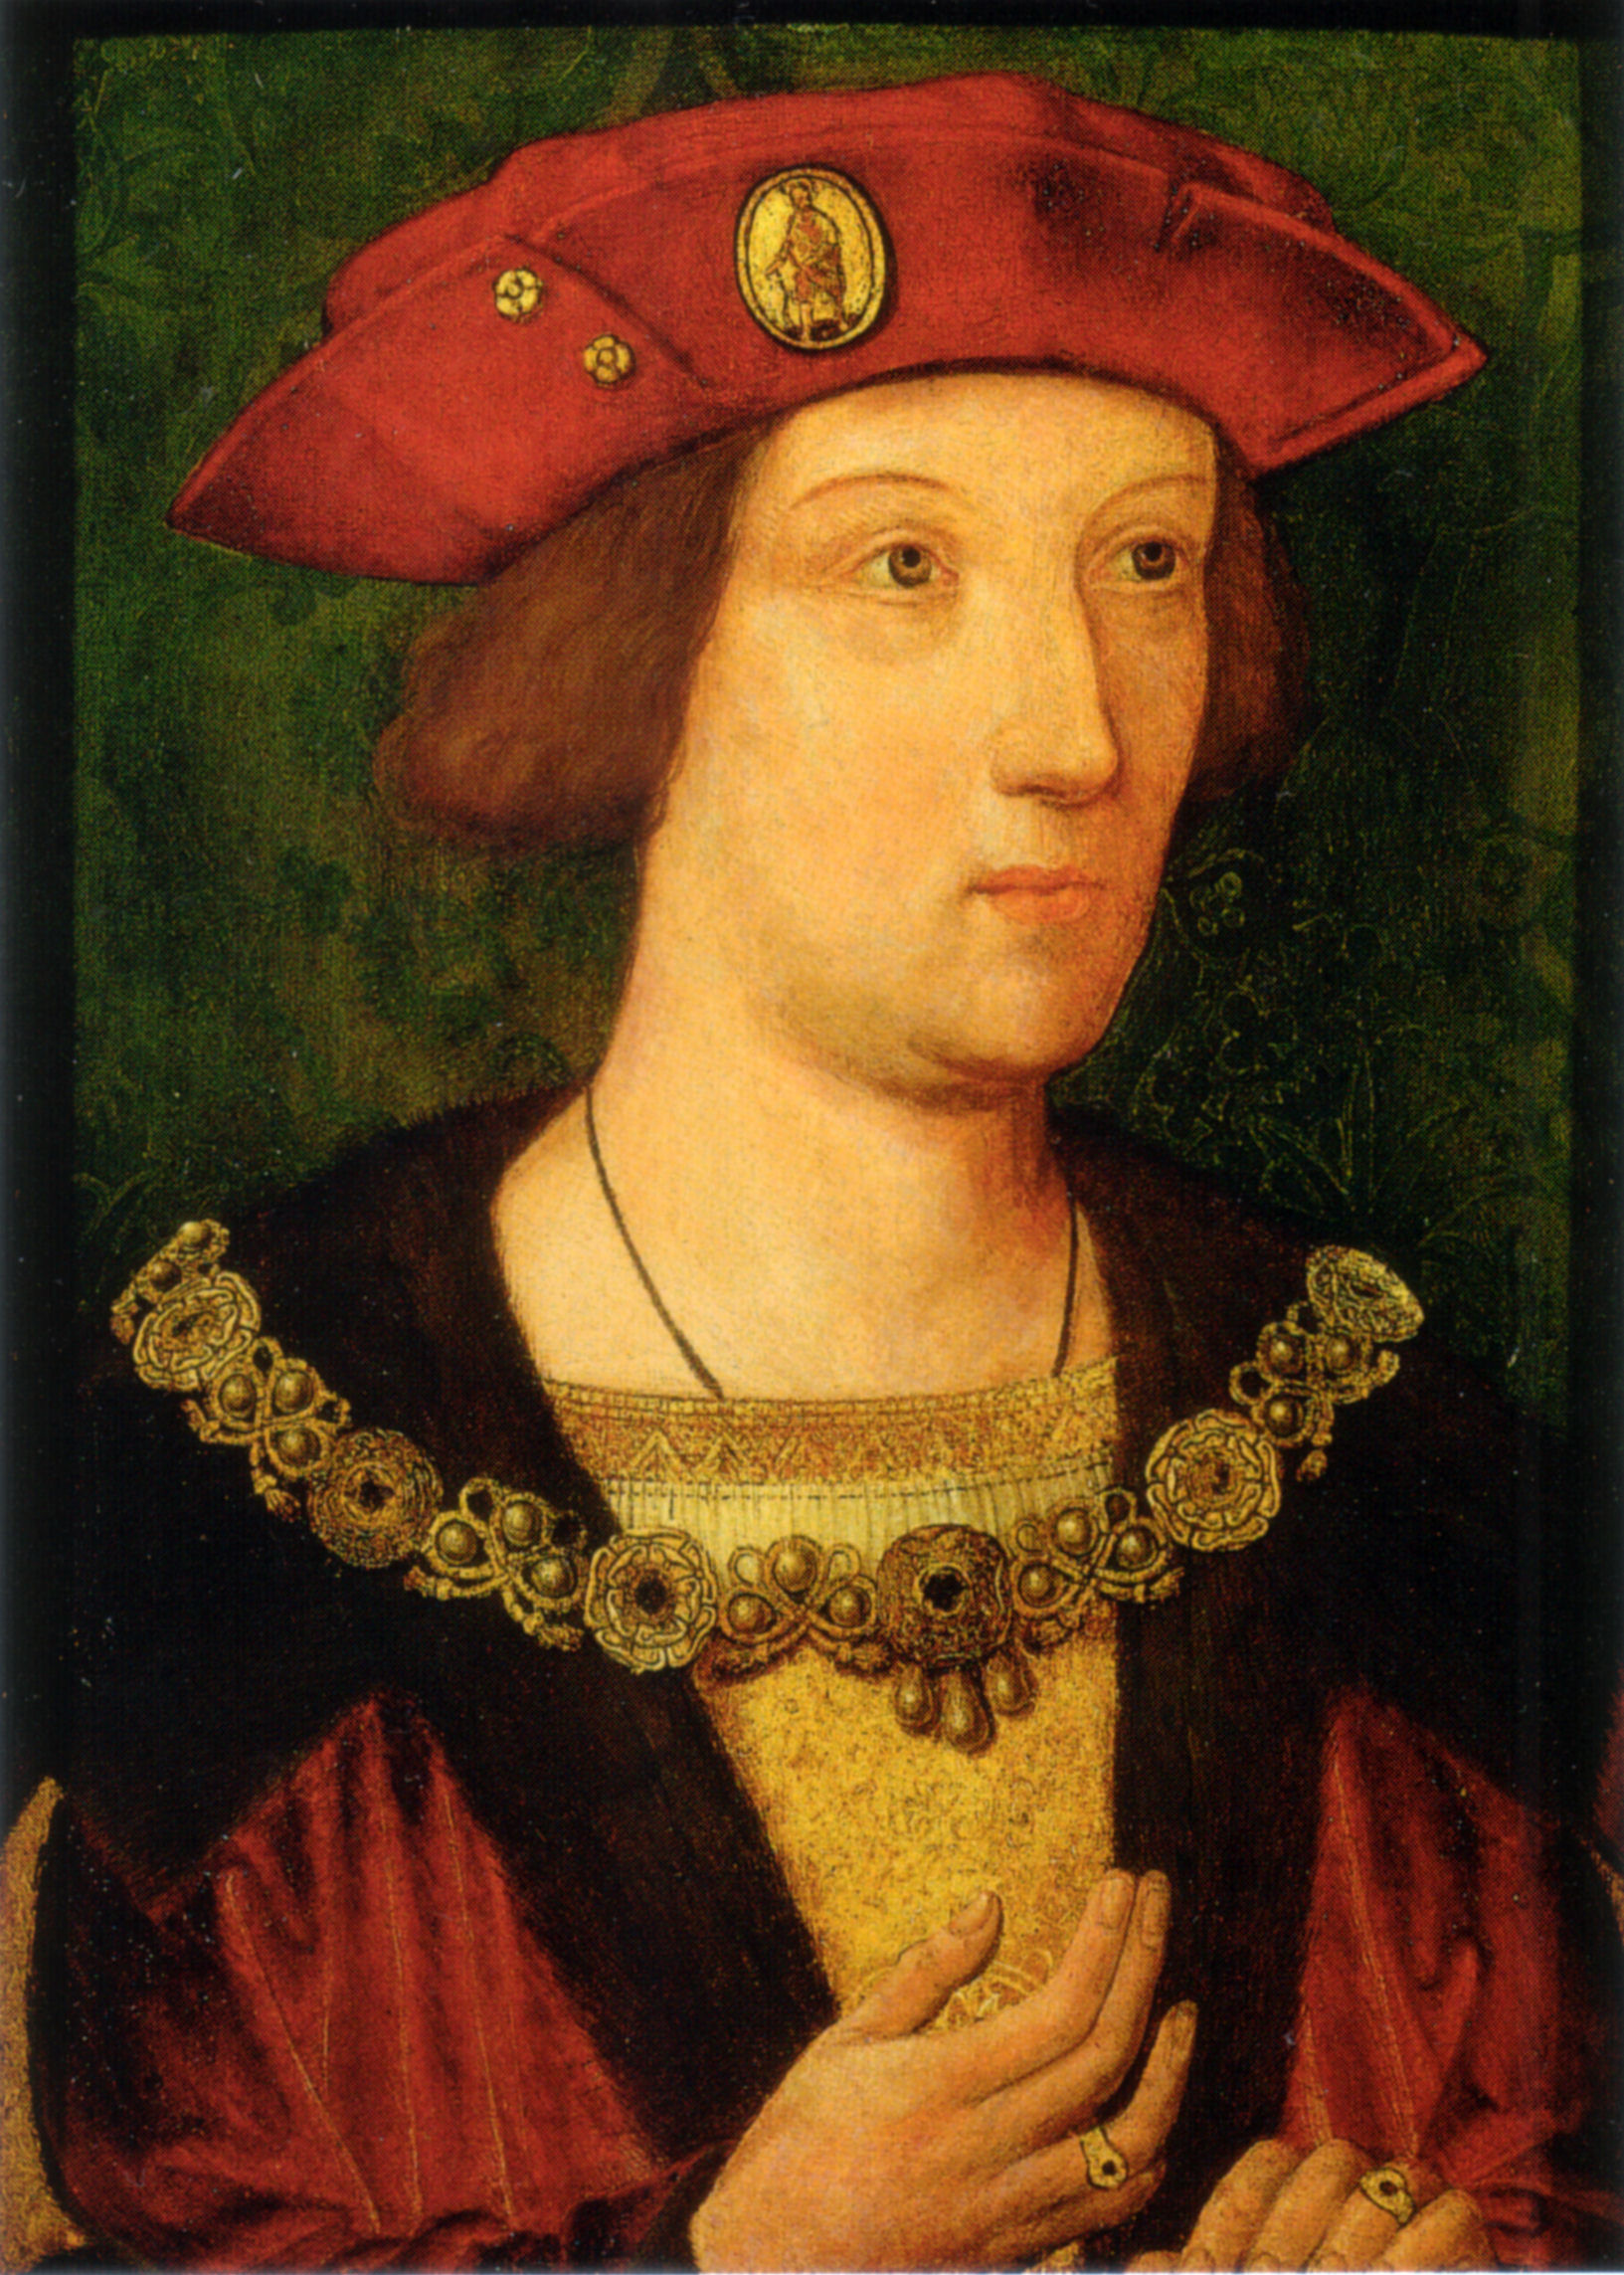 Arthur-Prince-of-Wales-1486-1502